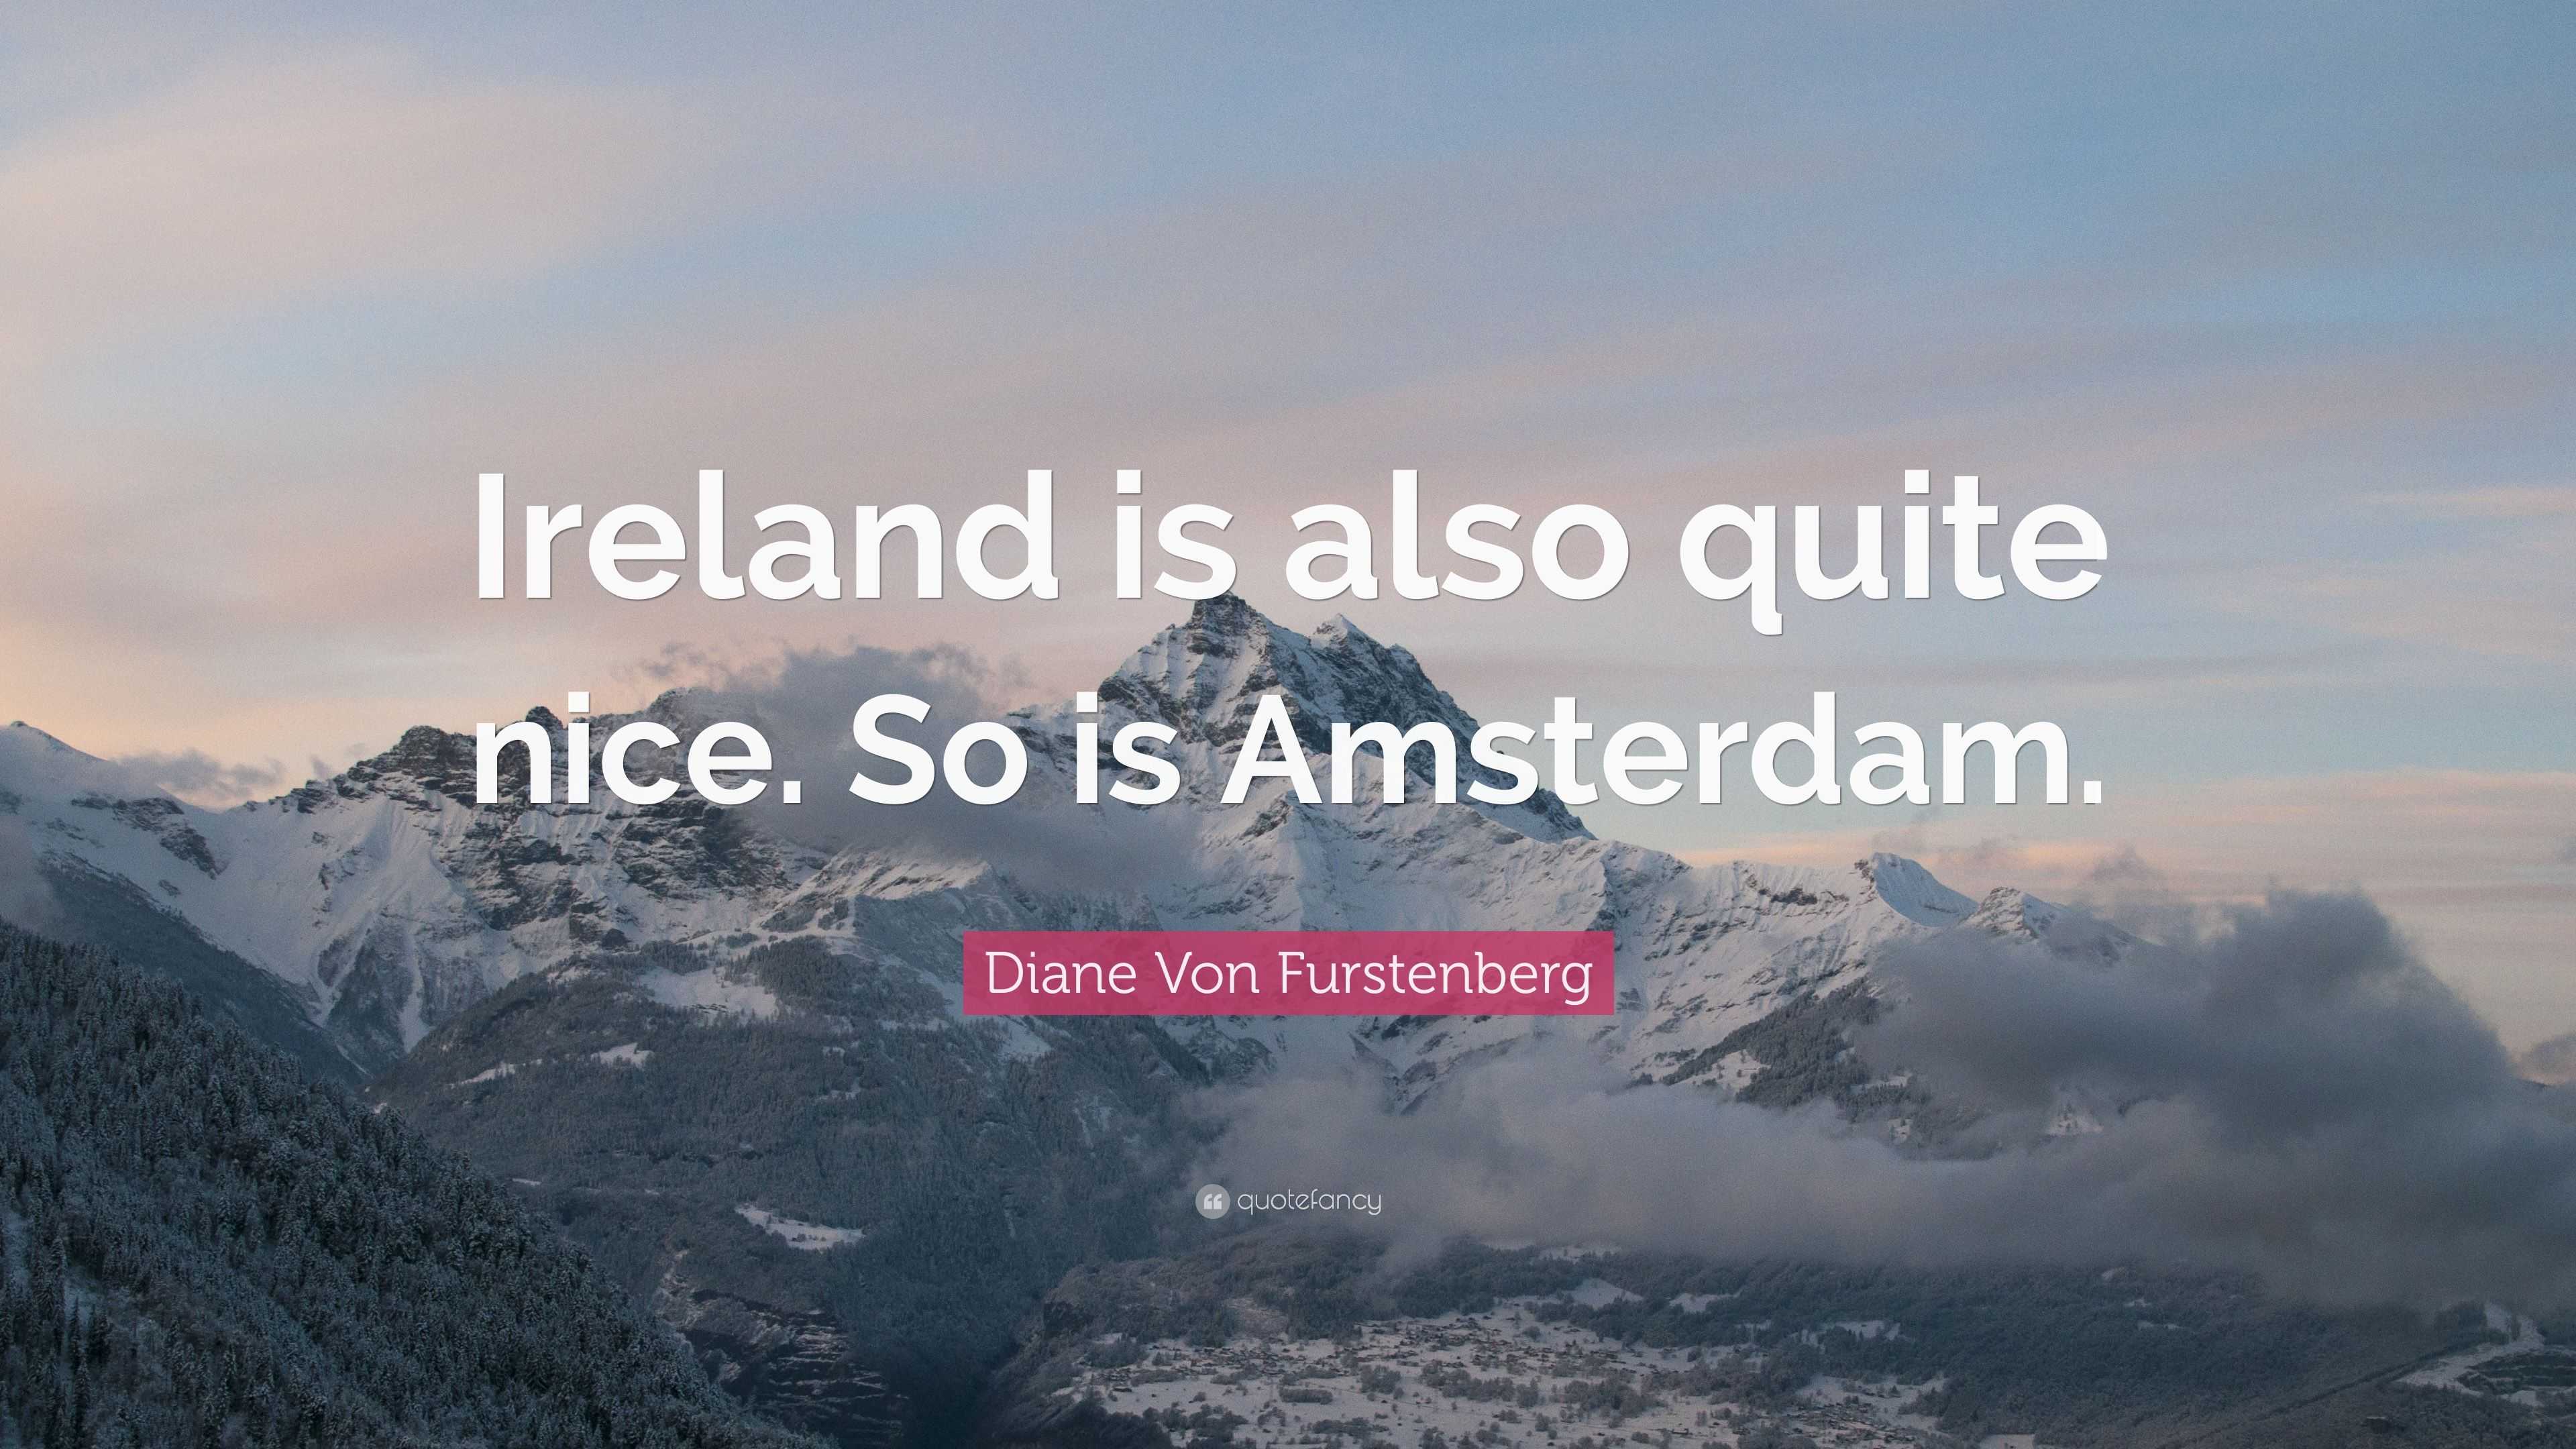 Diane Furstenberg is also quite nice. So Amsterdam.”